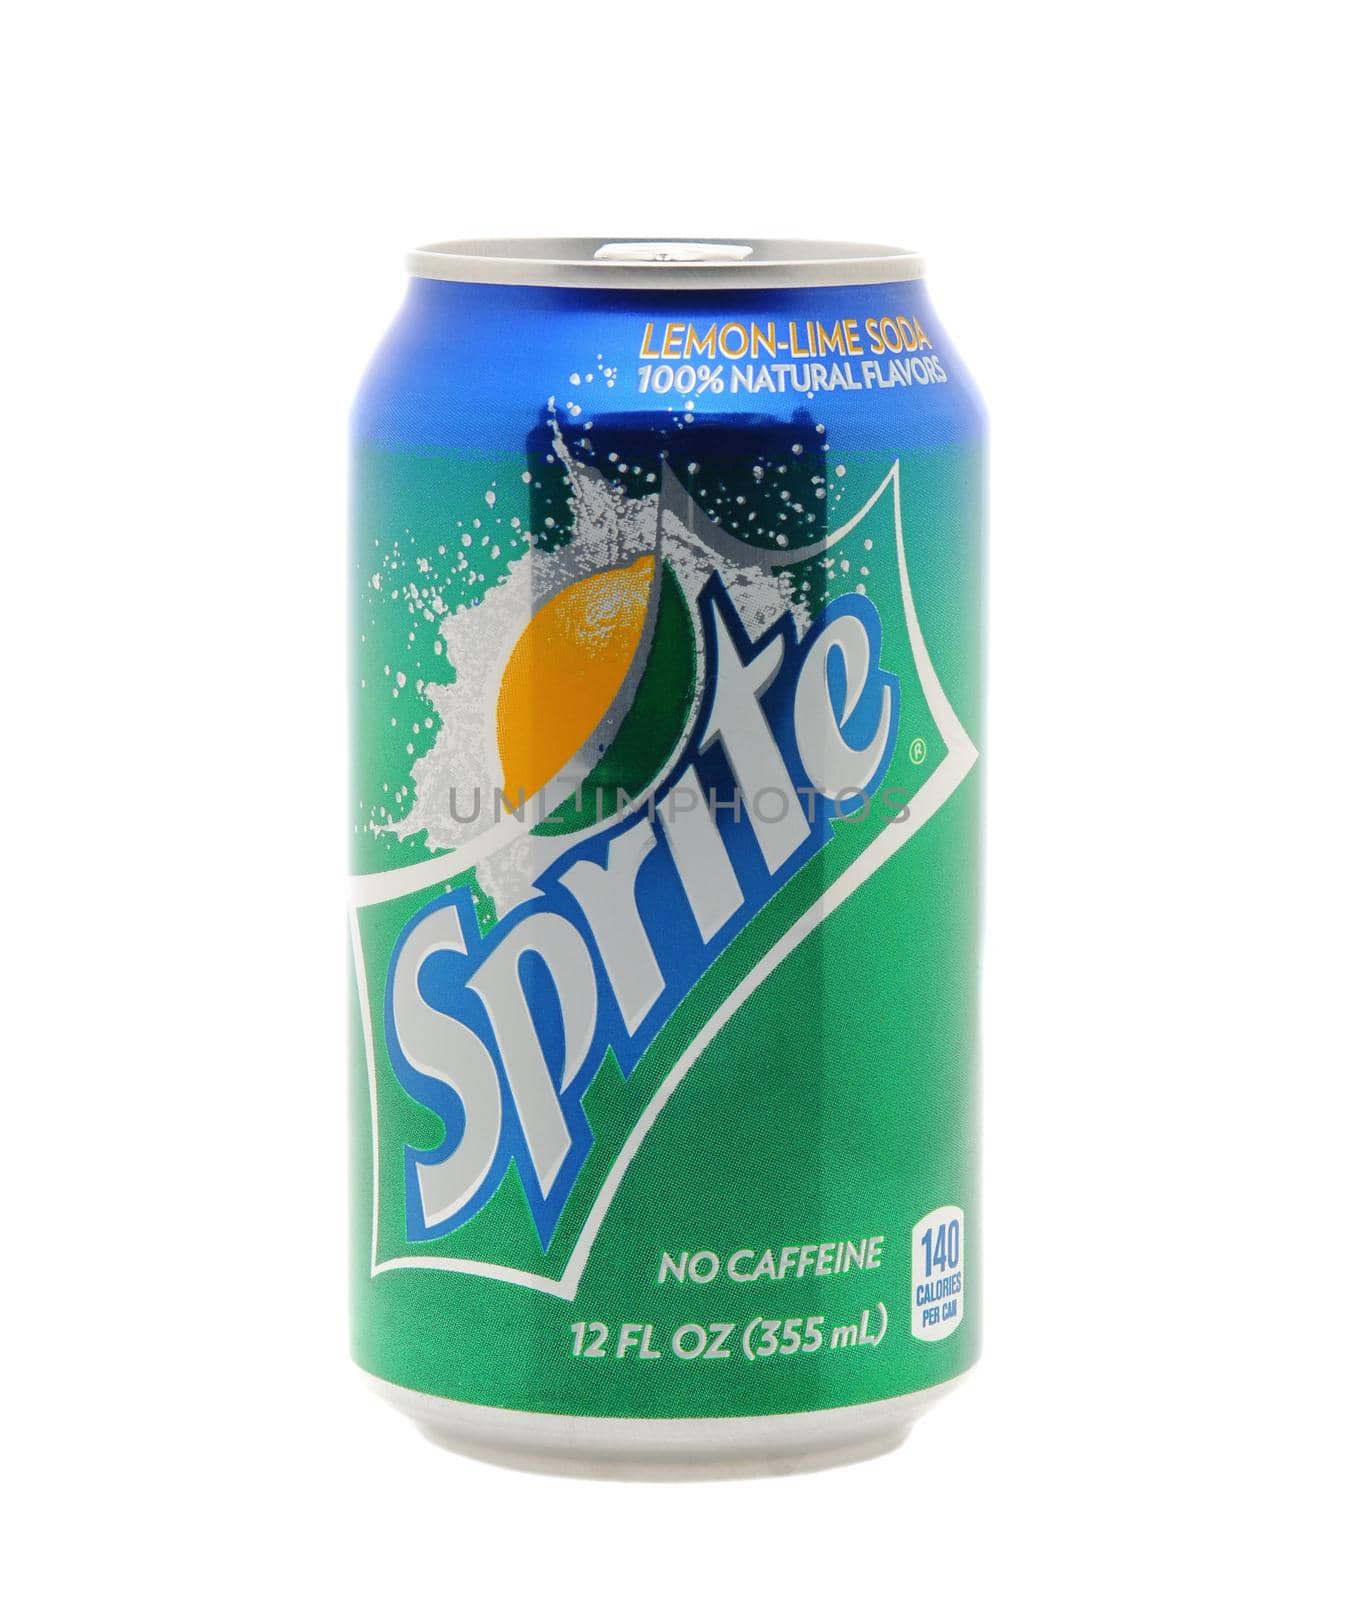 Single can of Sprite by sCukrov